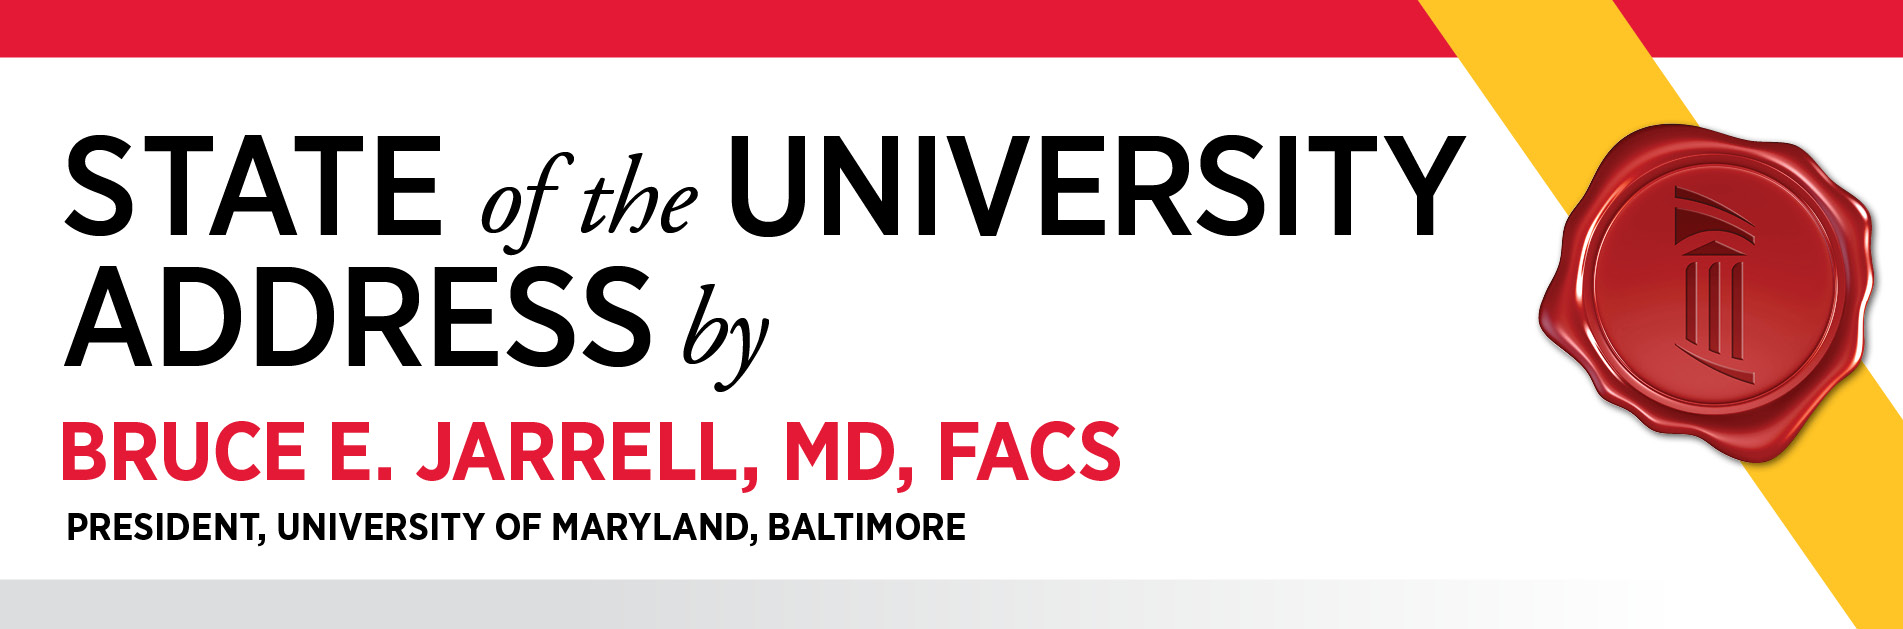 State of the University Address by Bruce E. Jarrell, MD, FACS, President, University of Maryland, Baltimore